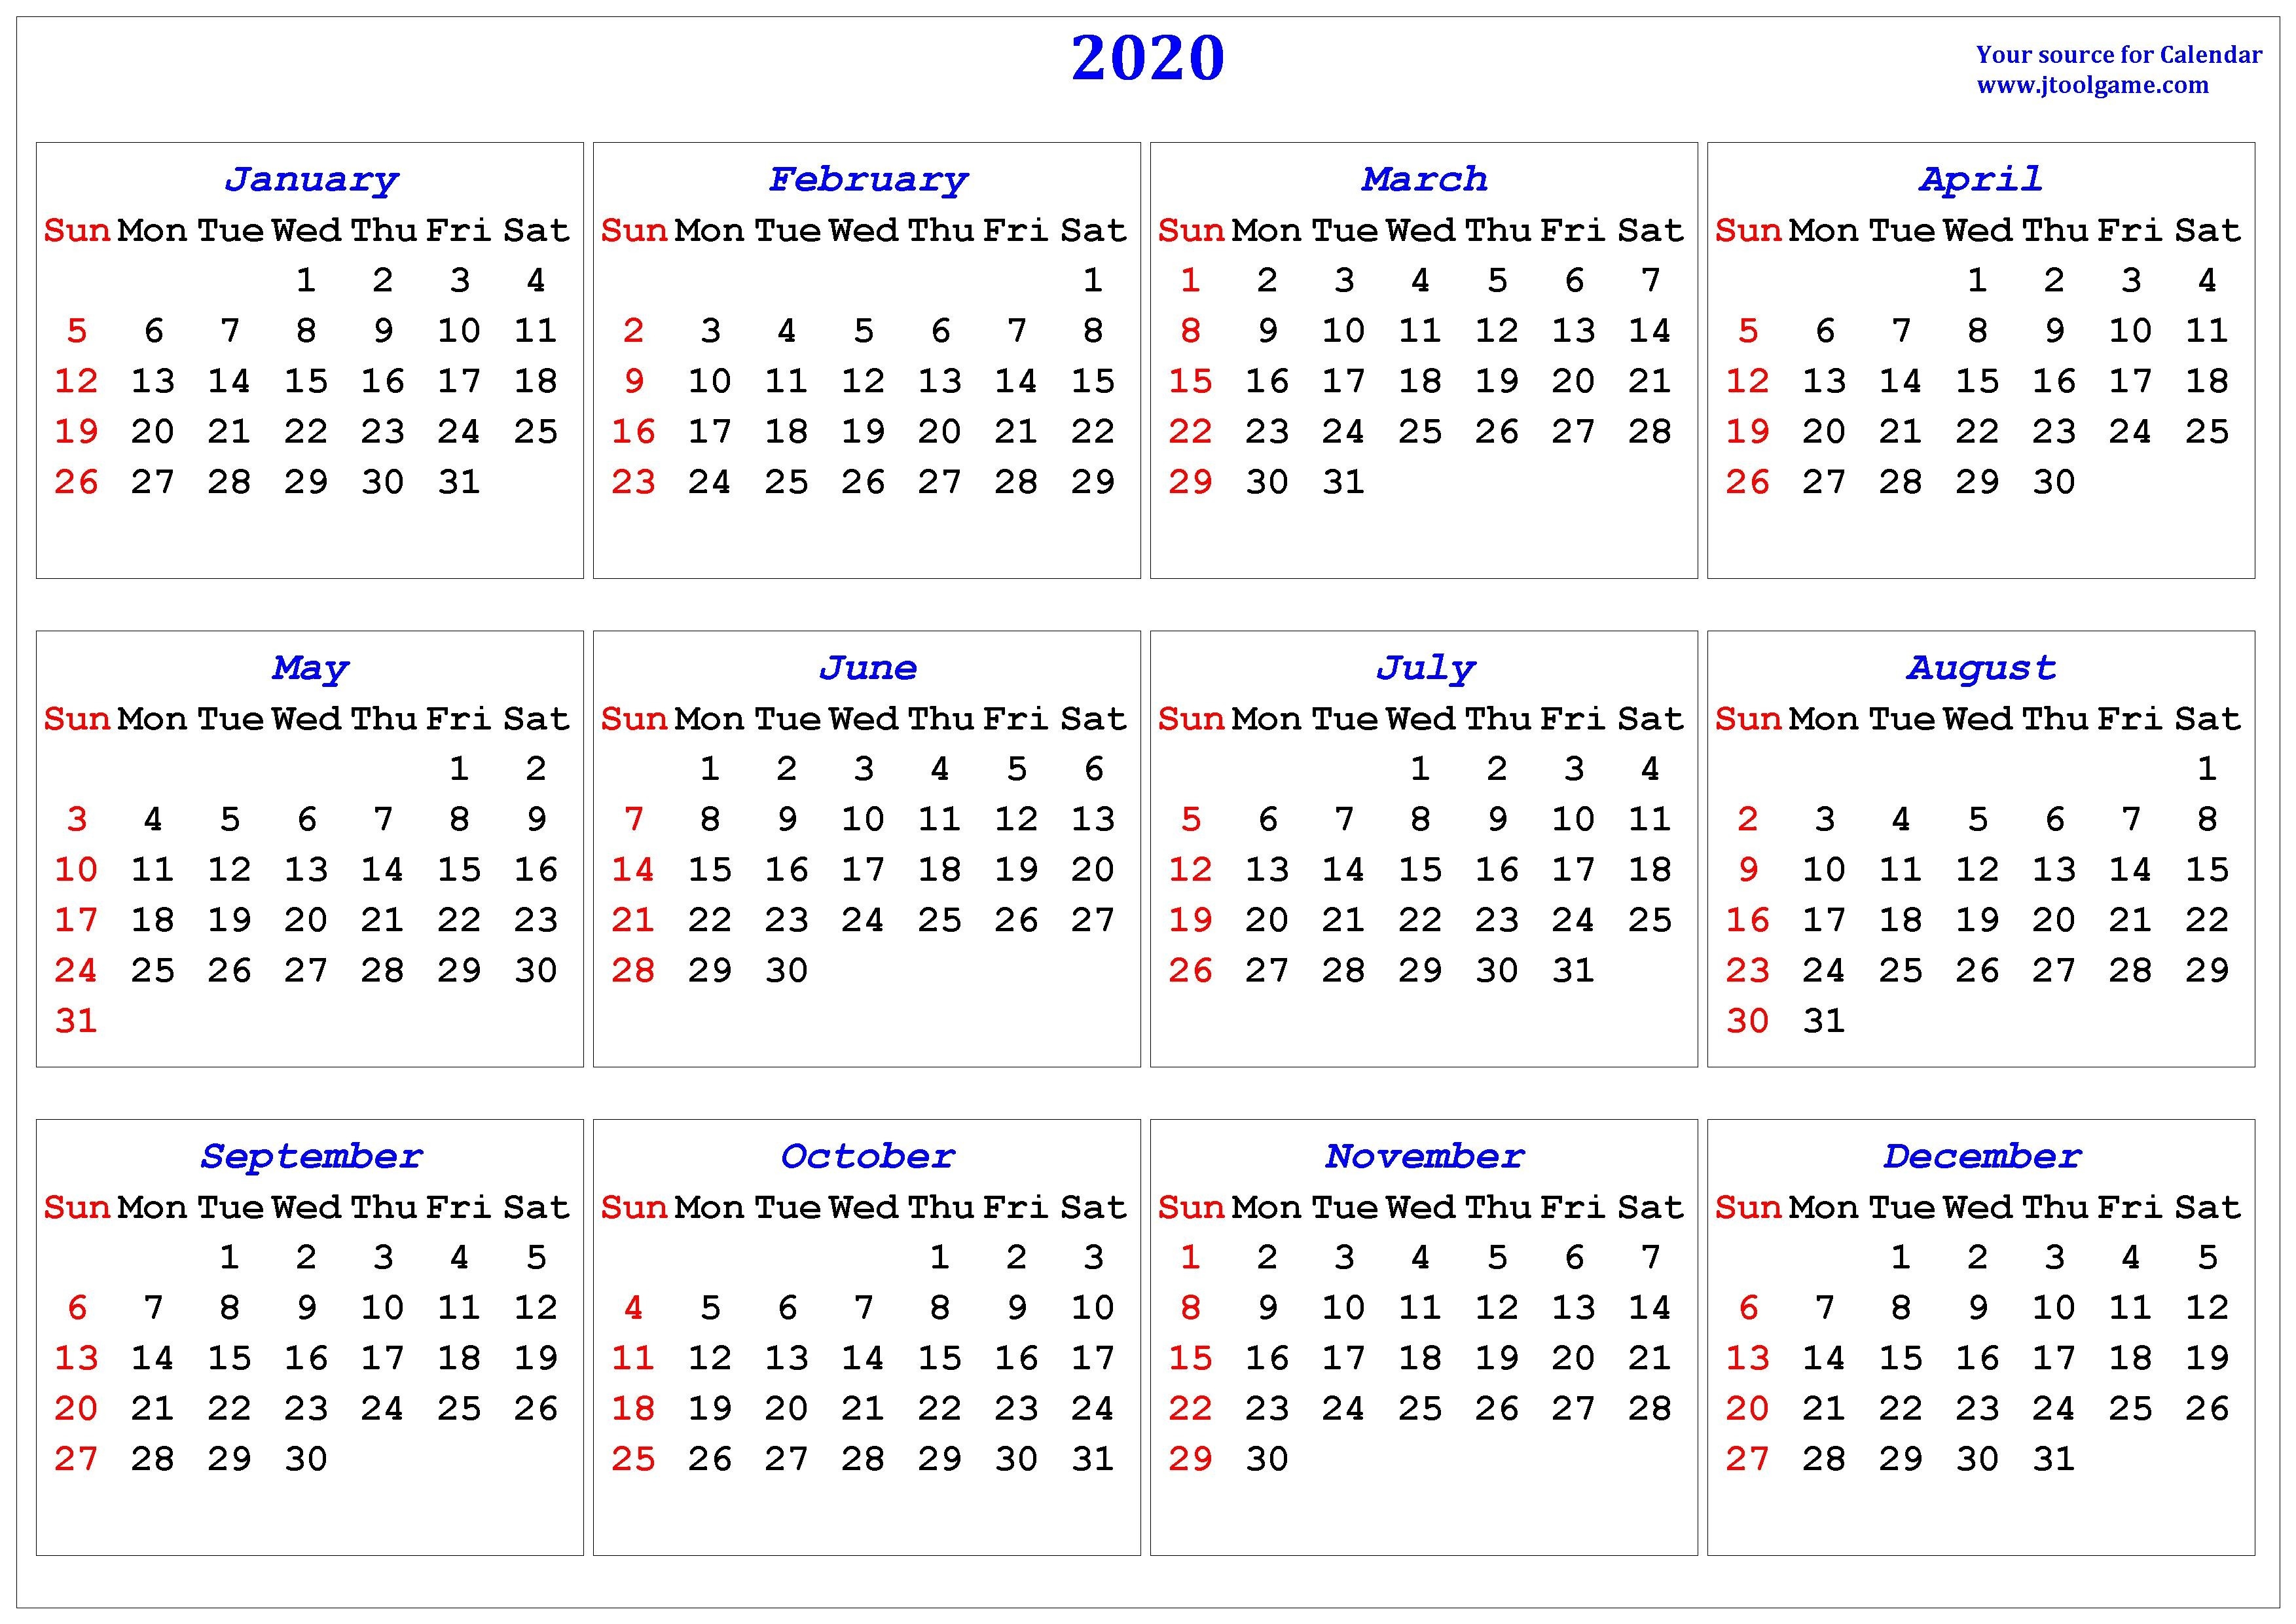 2020 Calendar - Printable Calendar. 2020 Calendar In-List Of Holidays By Month 2020